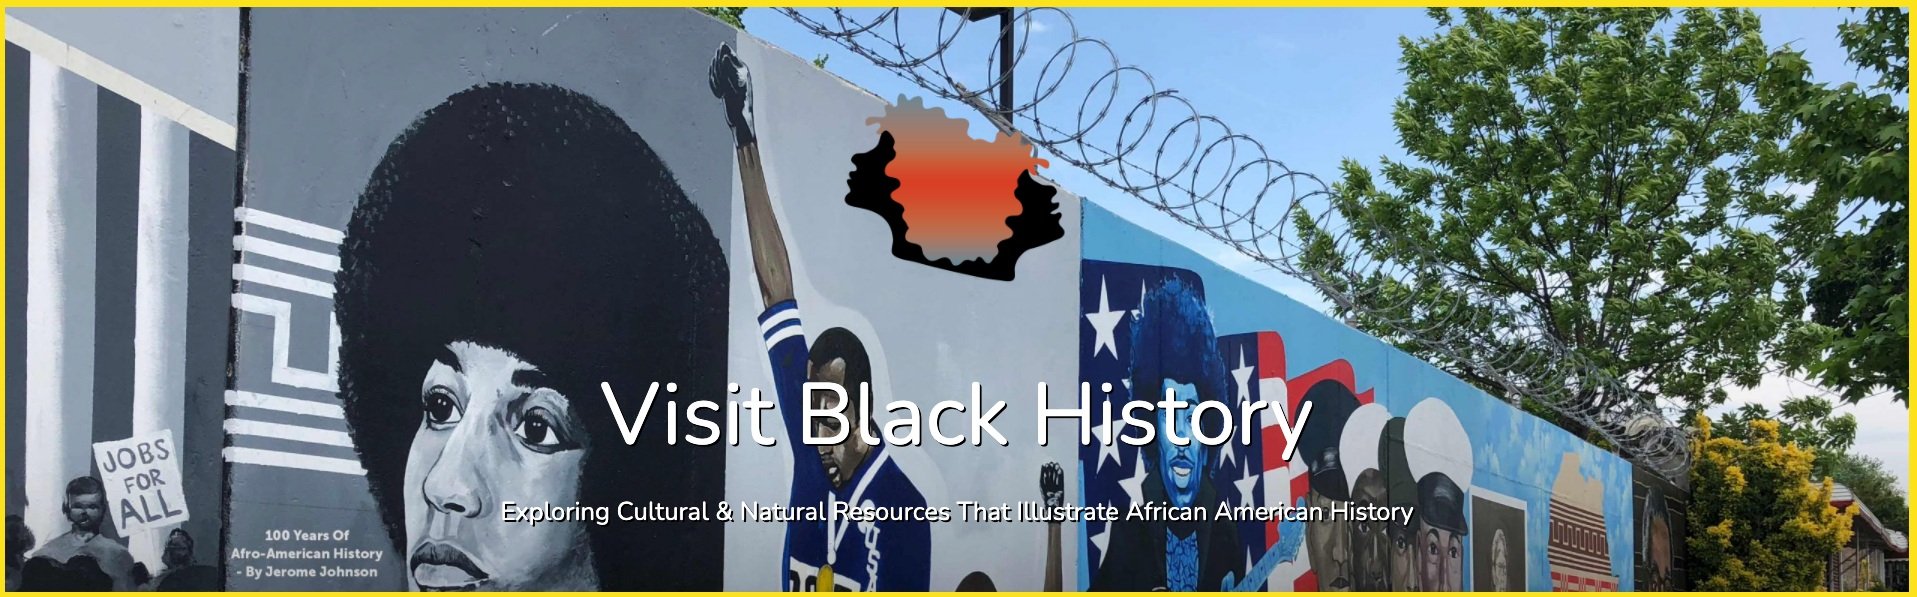 Visit Black History